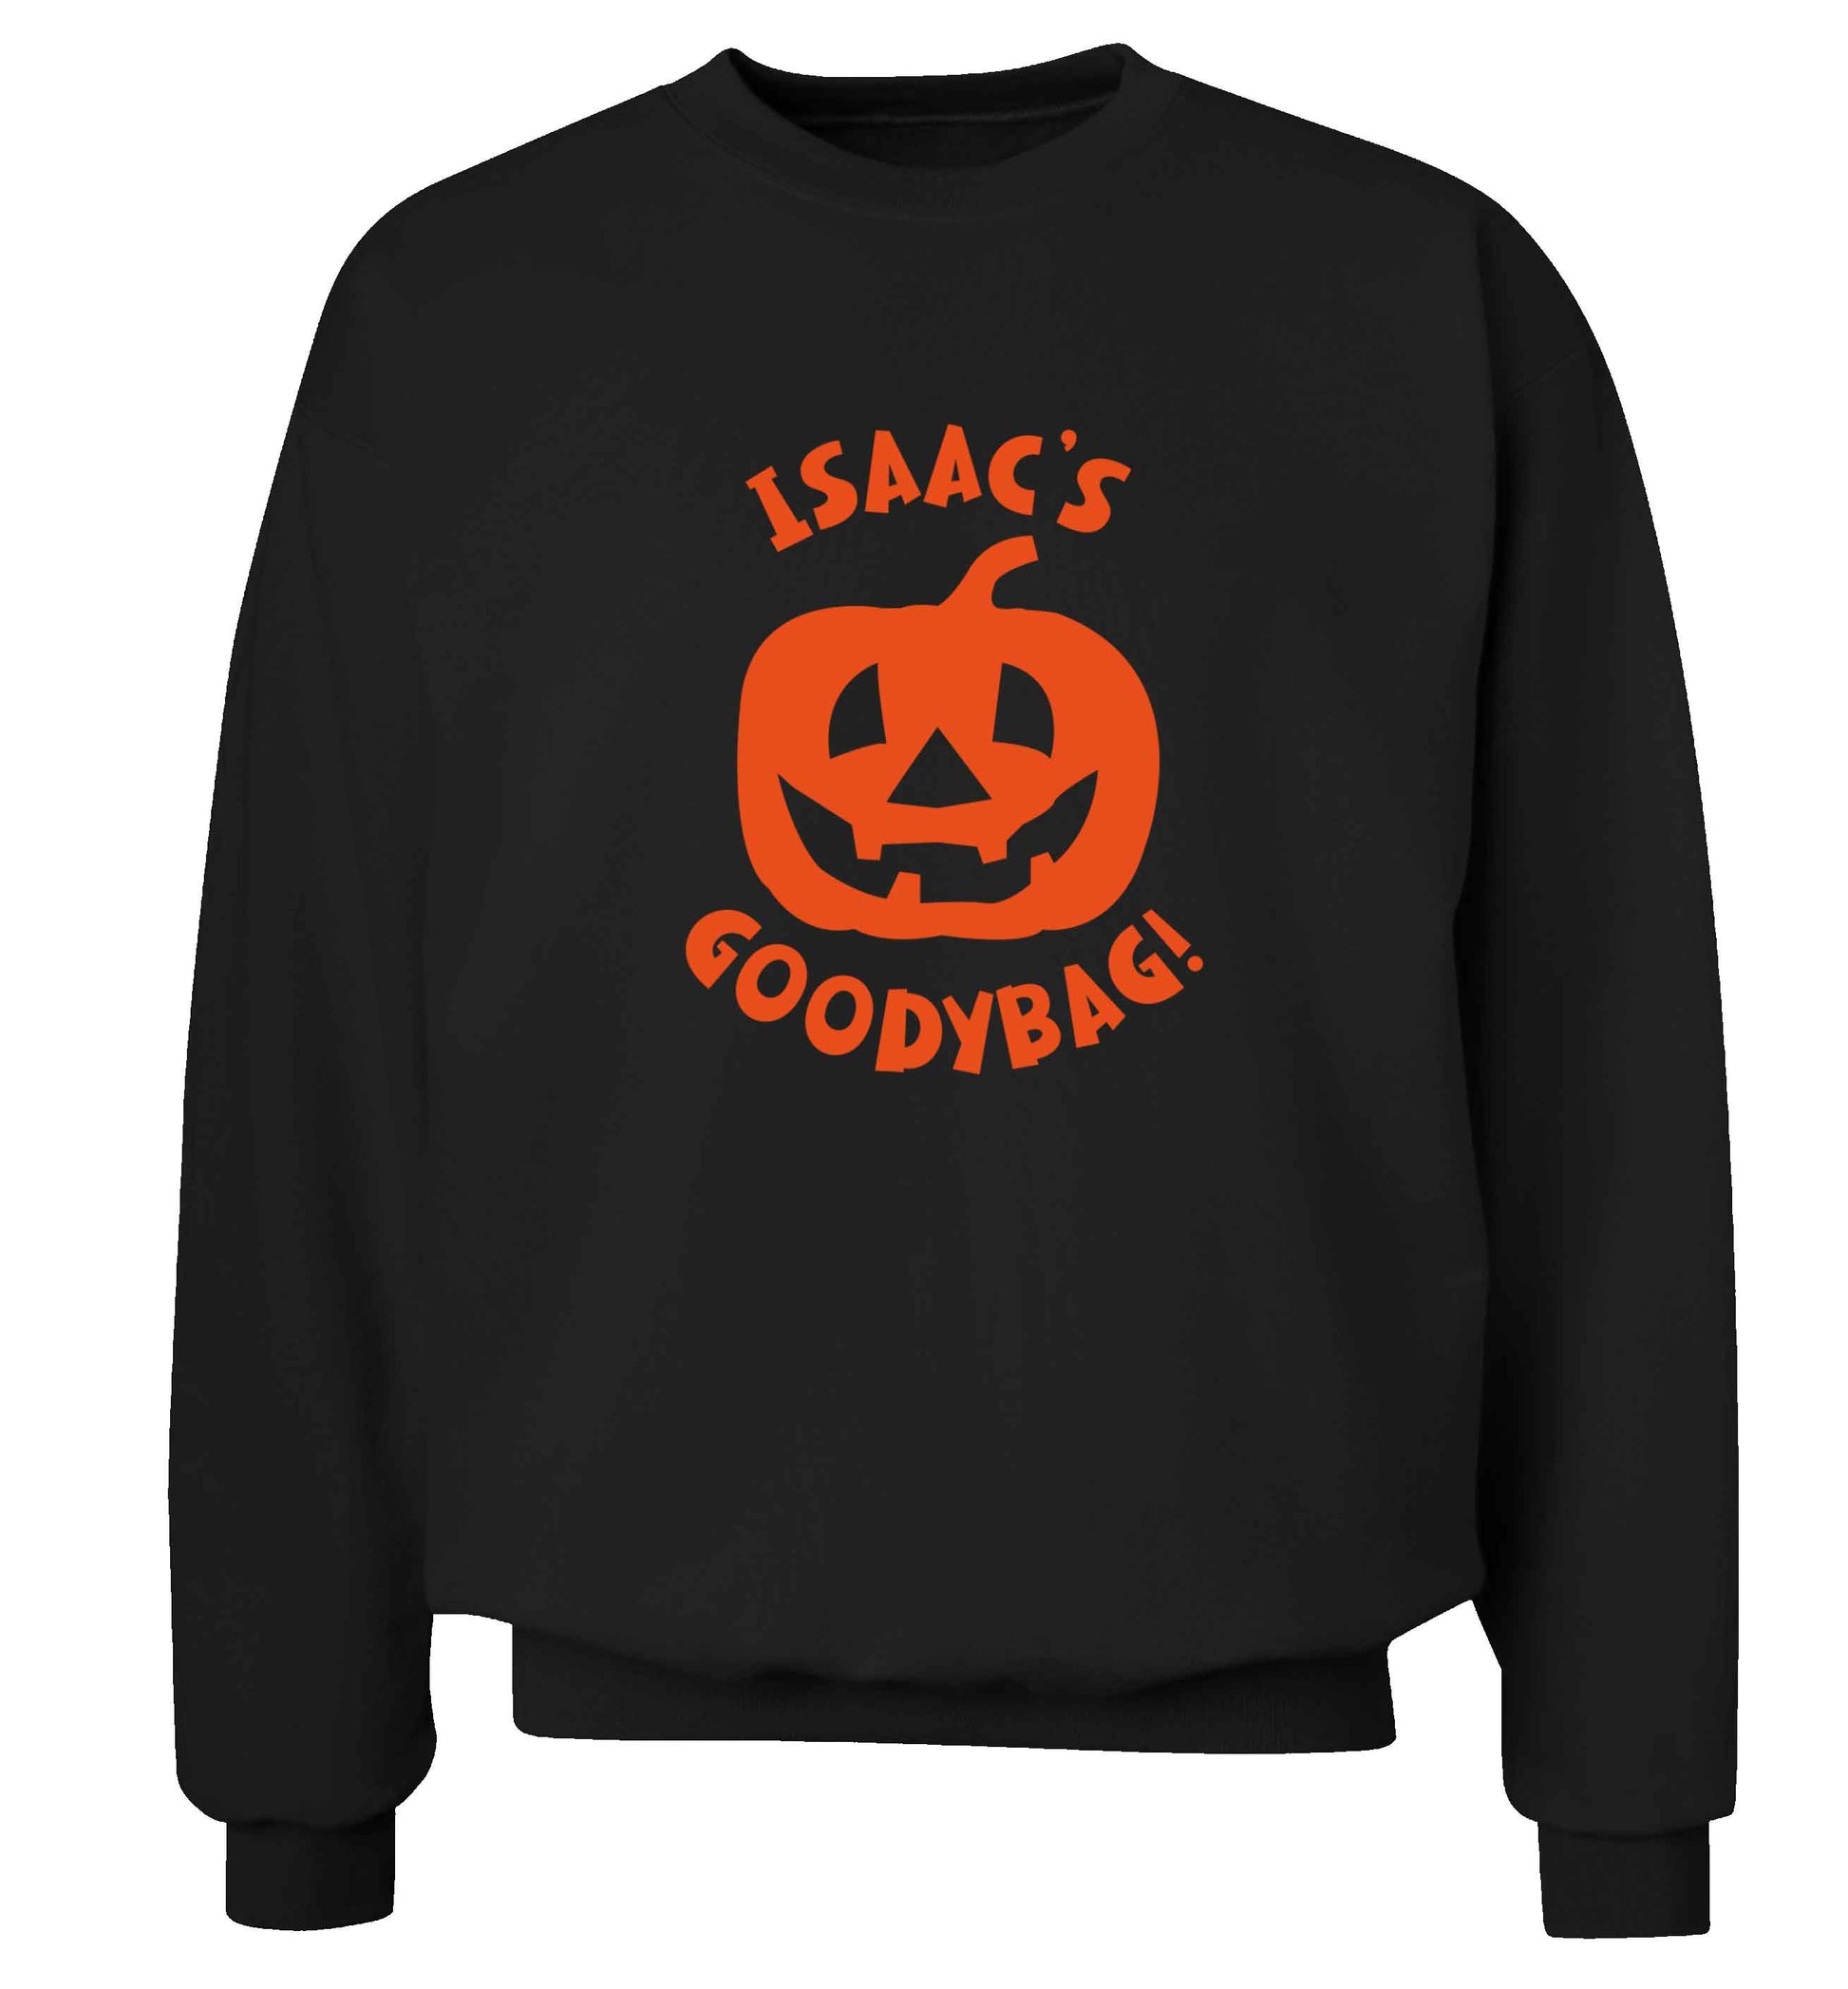 Pumpkin on Way adult's unisex black sweater 2XL